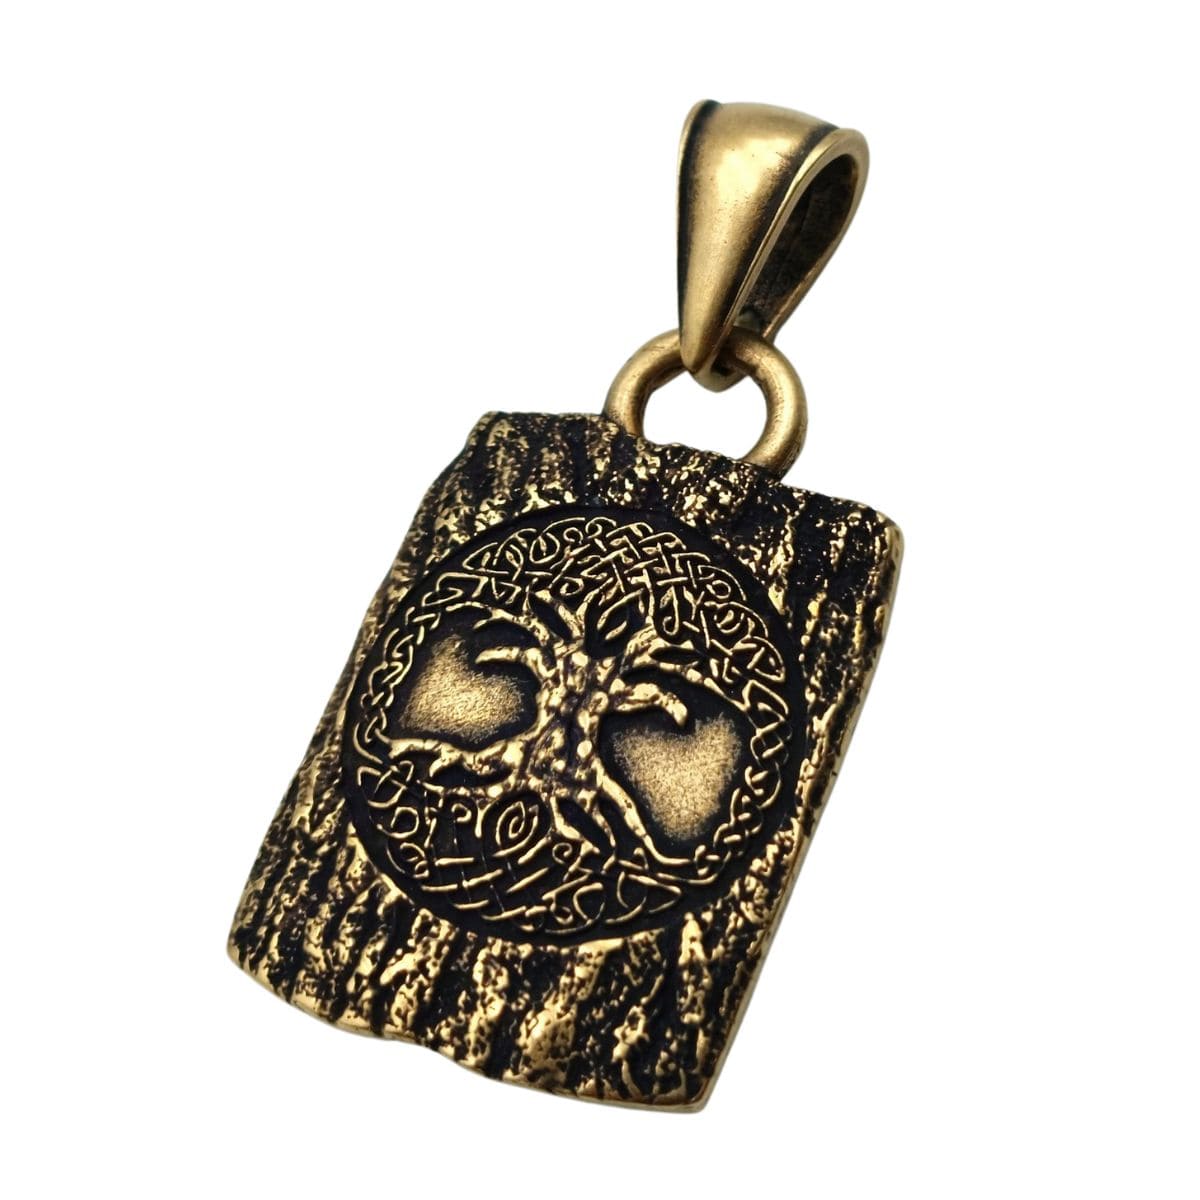 Yggdrasil bronze pendant